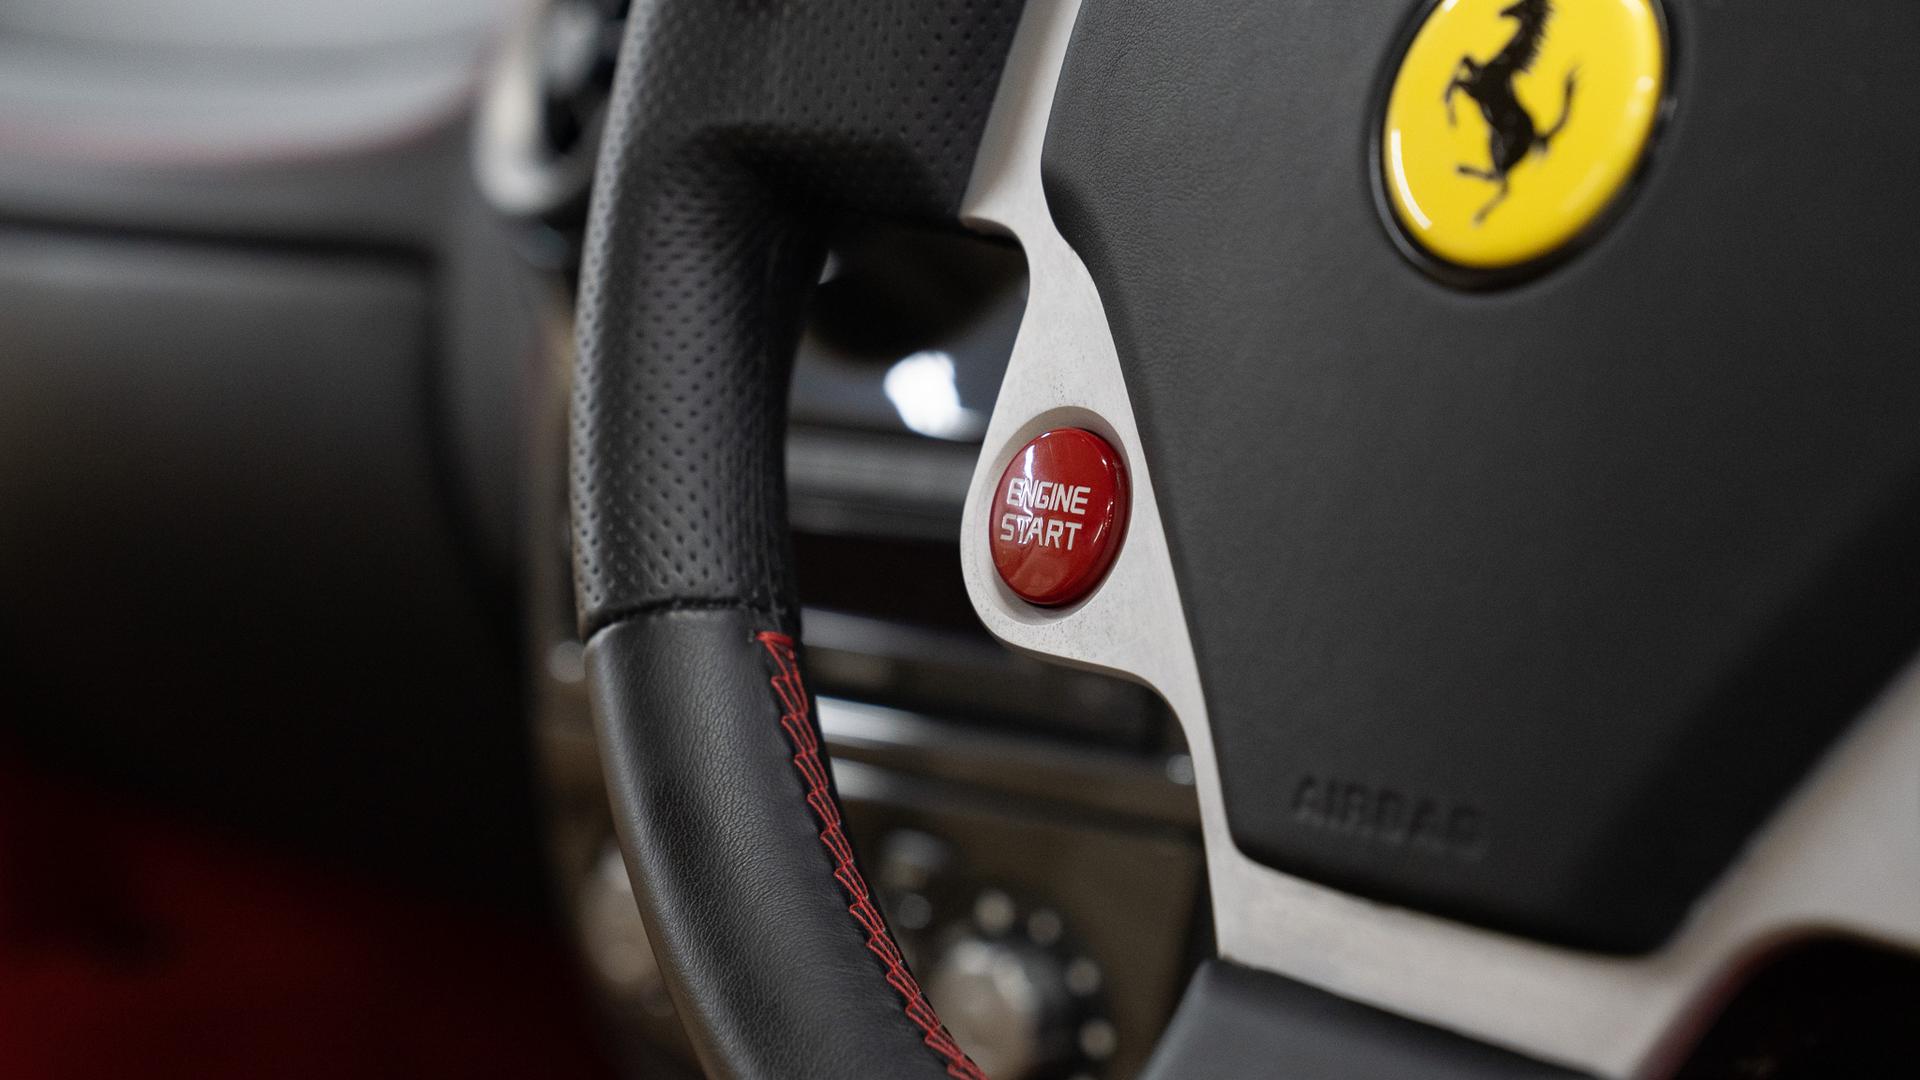 Ferrari F430 Photo 33913454-84bb-4c41-a43b-c2d040c38d01.jpg